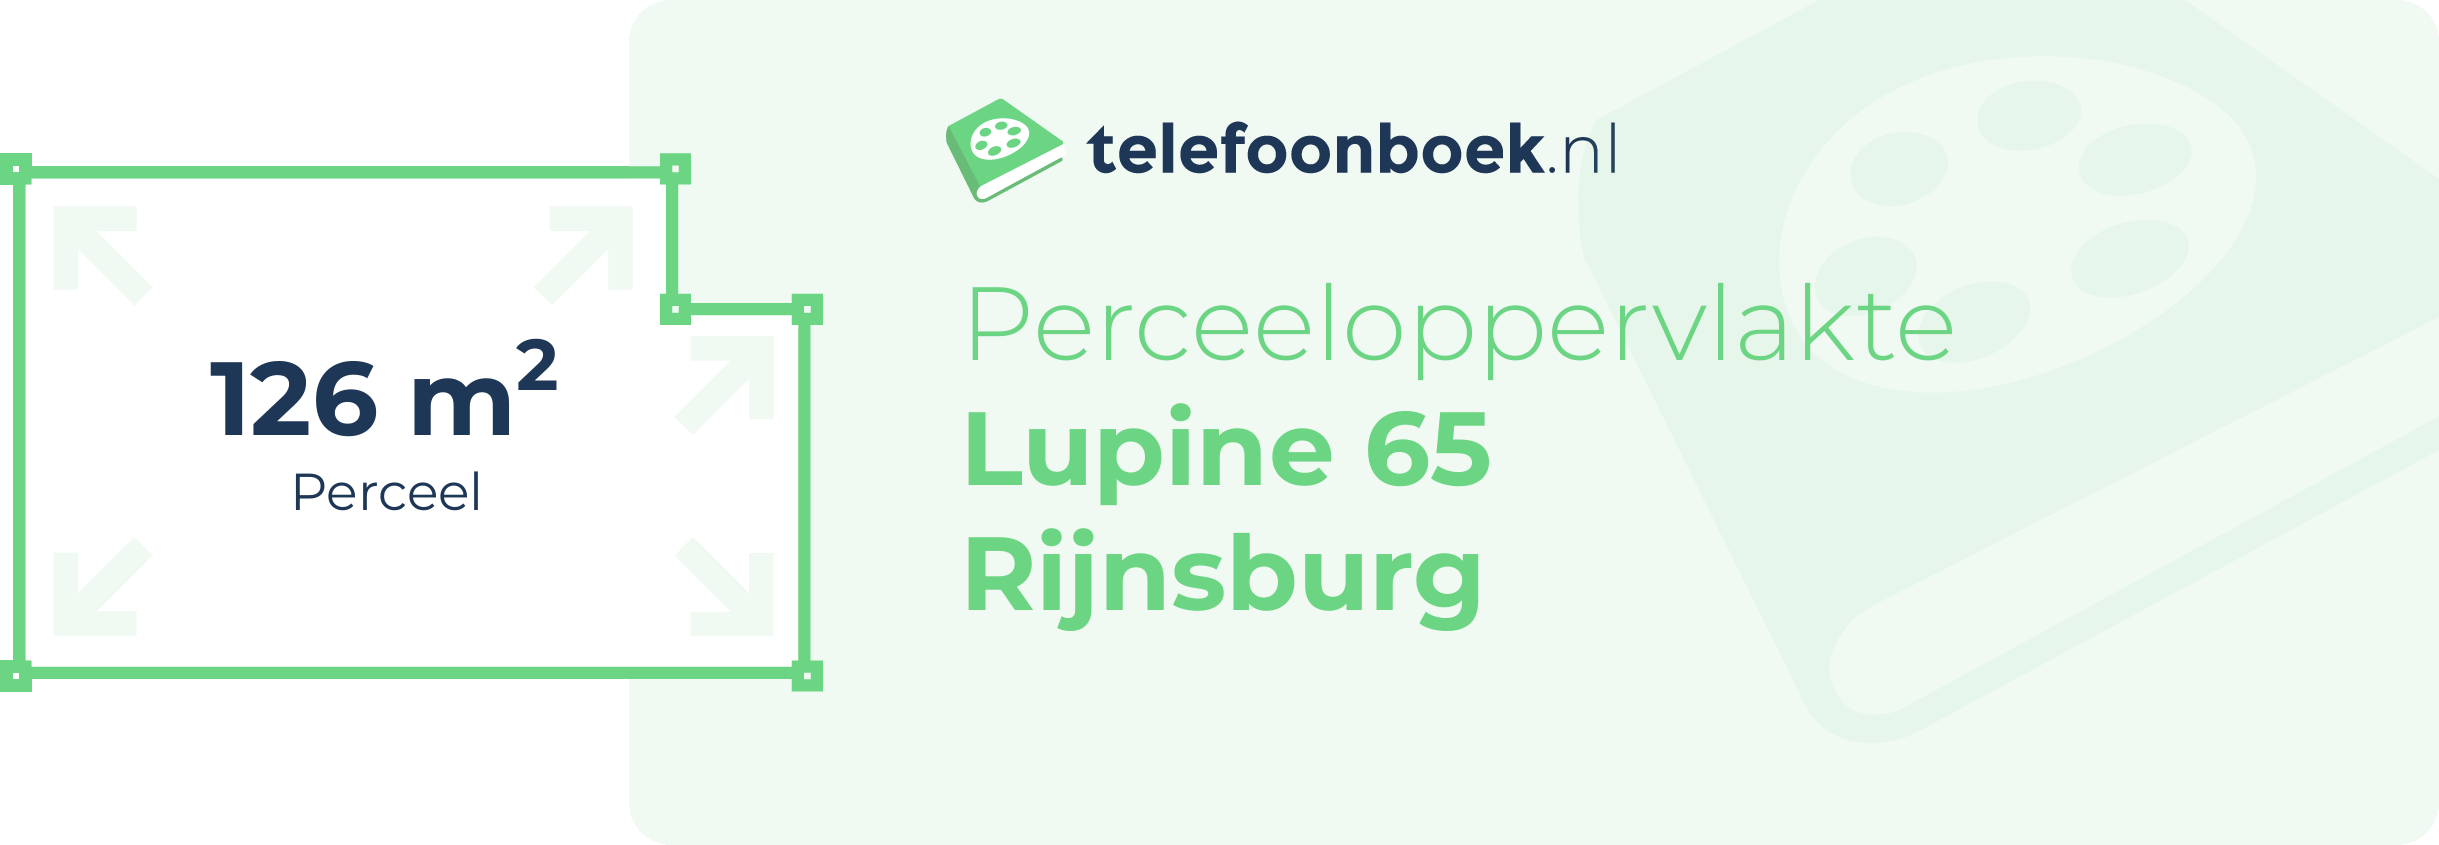 Perceeloppervlakte Lupine 65 Rijnsburg